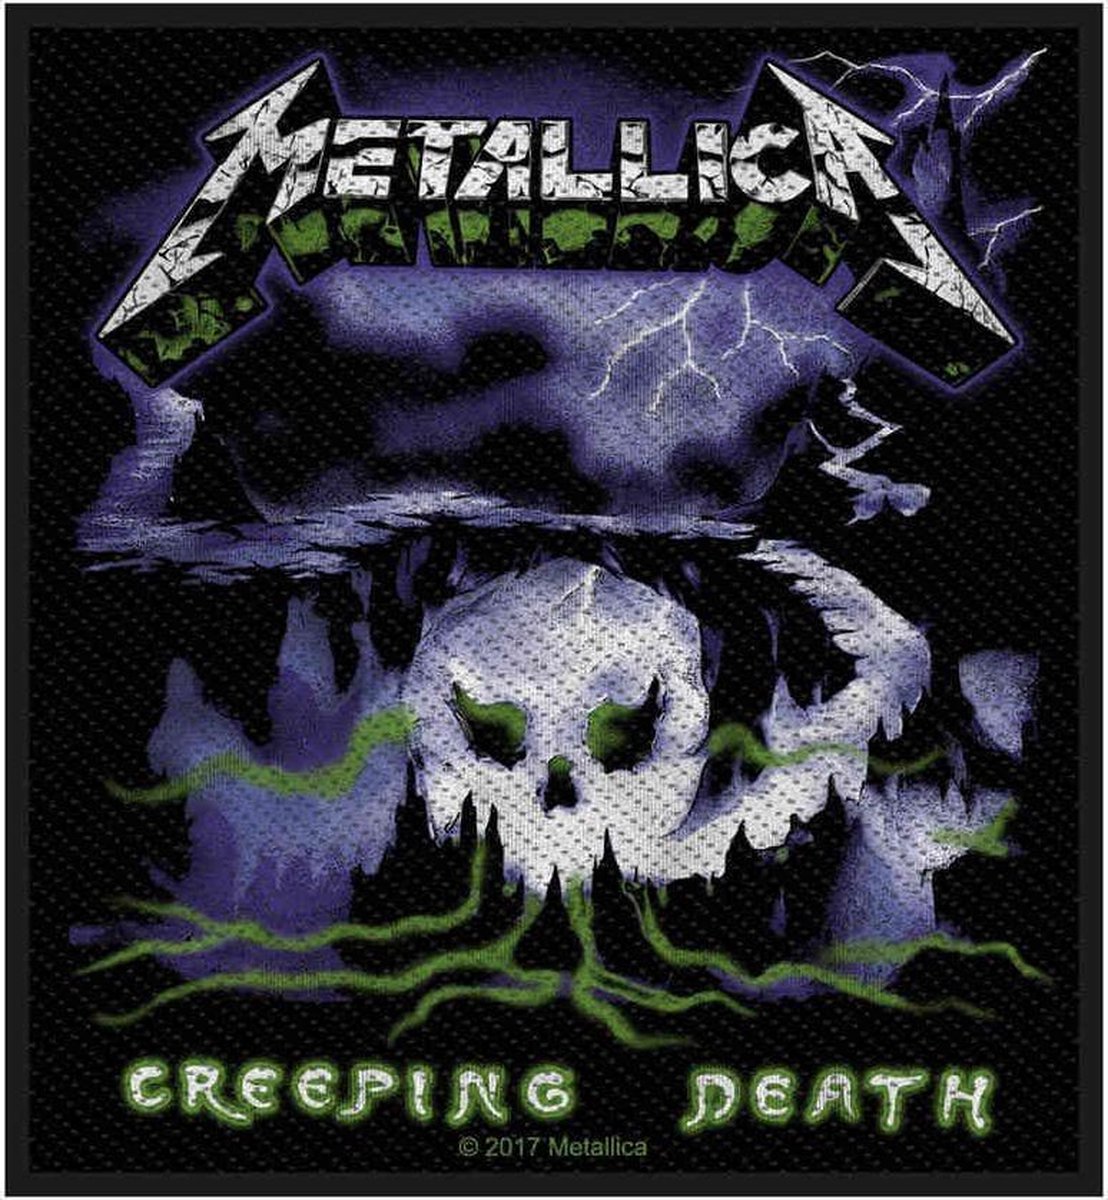 Metallica - Dealer - Patch